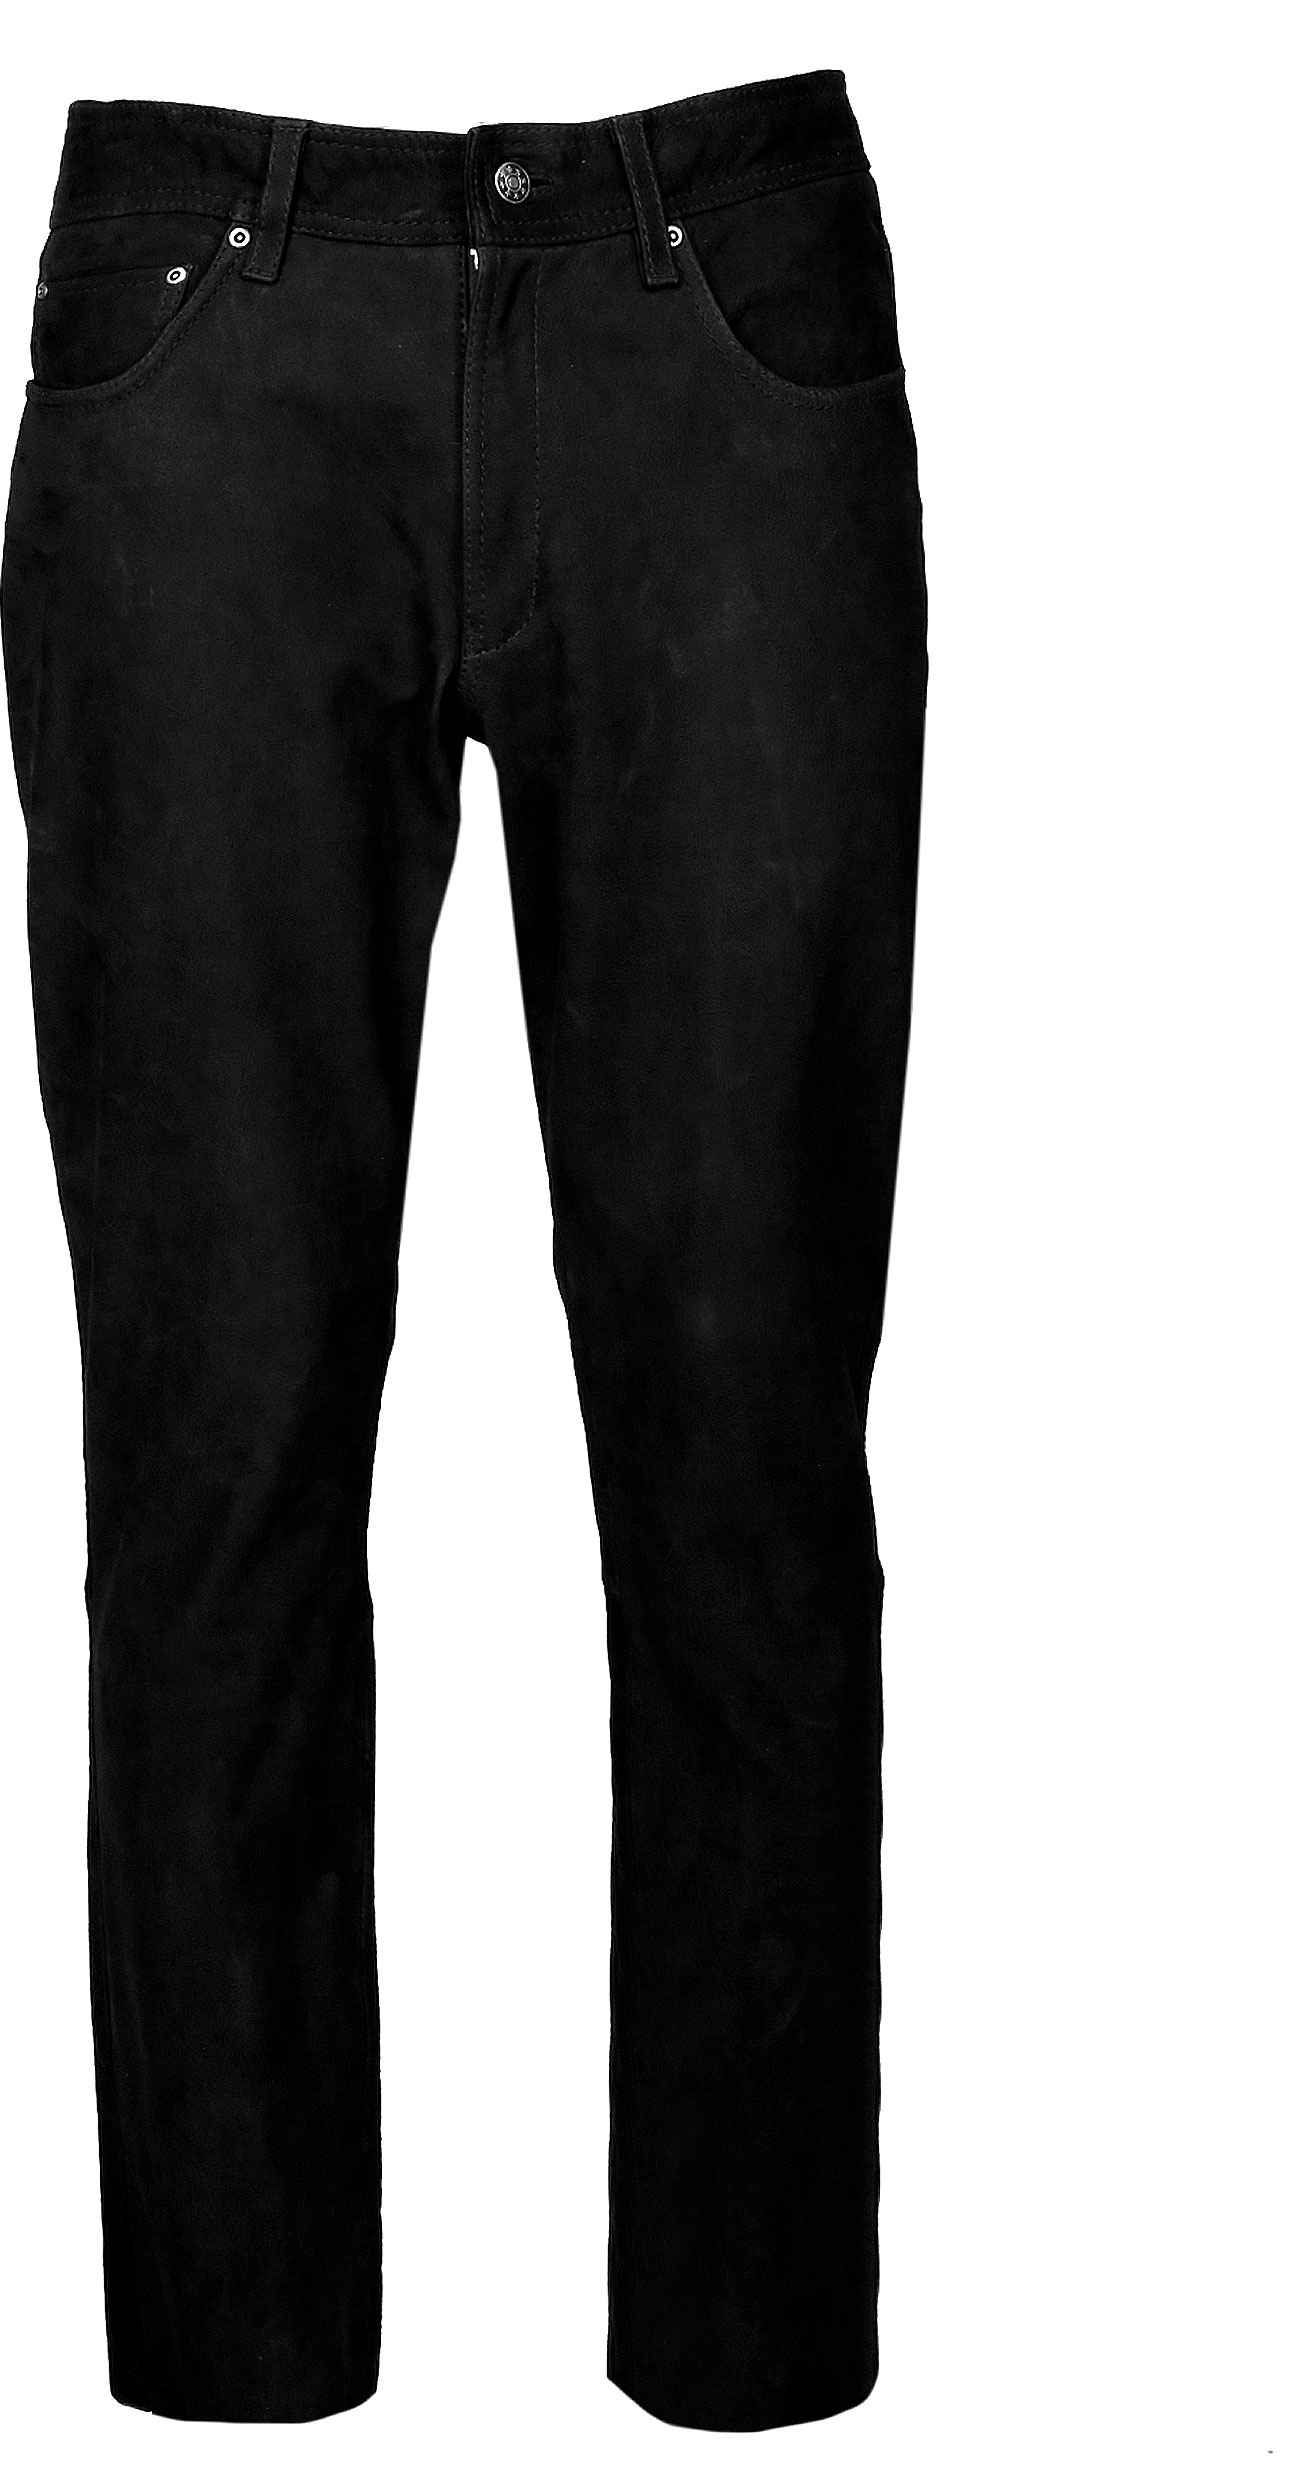 JCC Phill, pantalon en cuir - Noir - 54